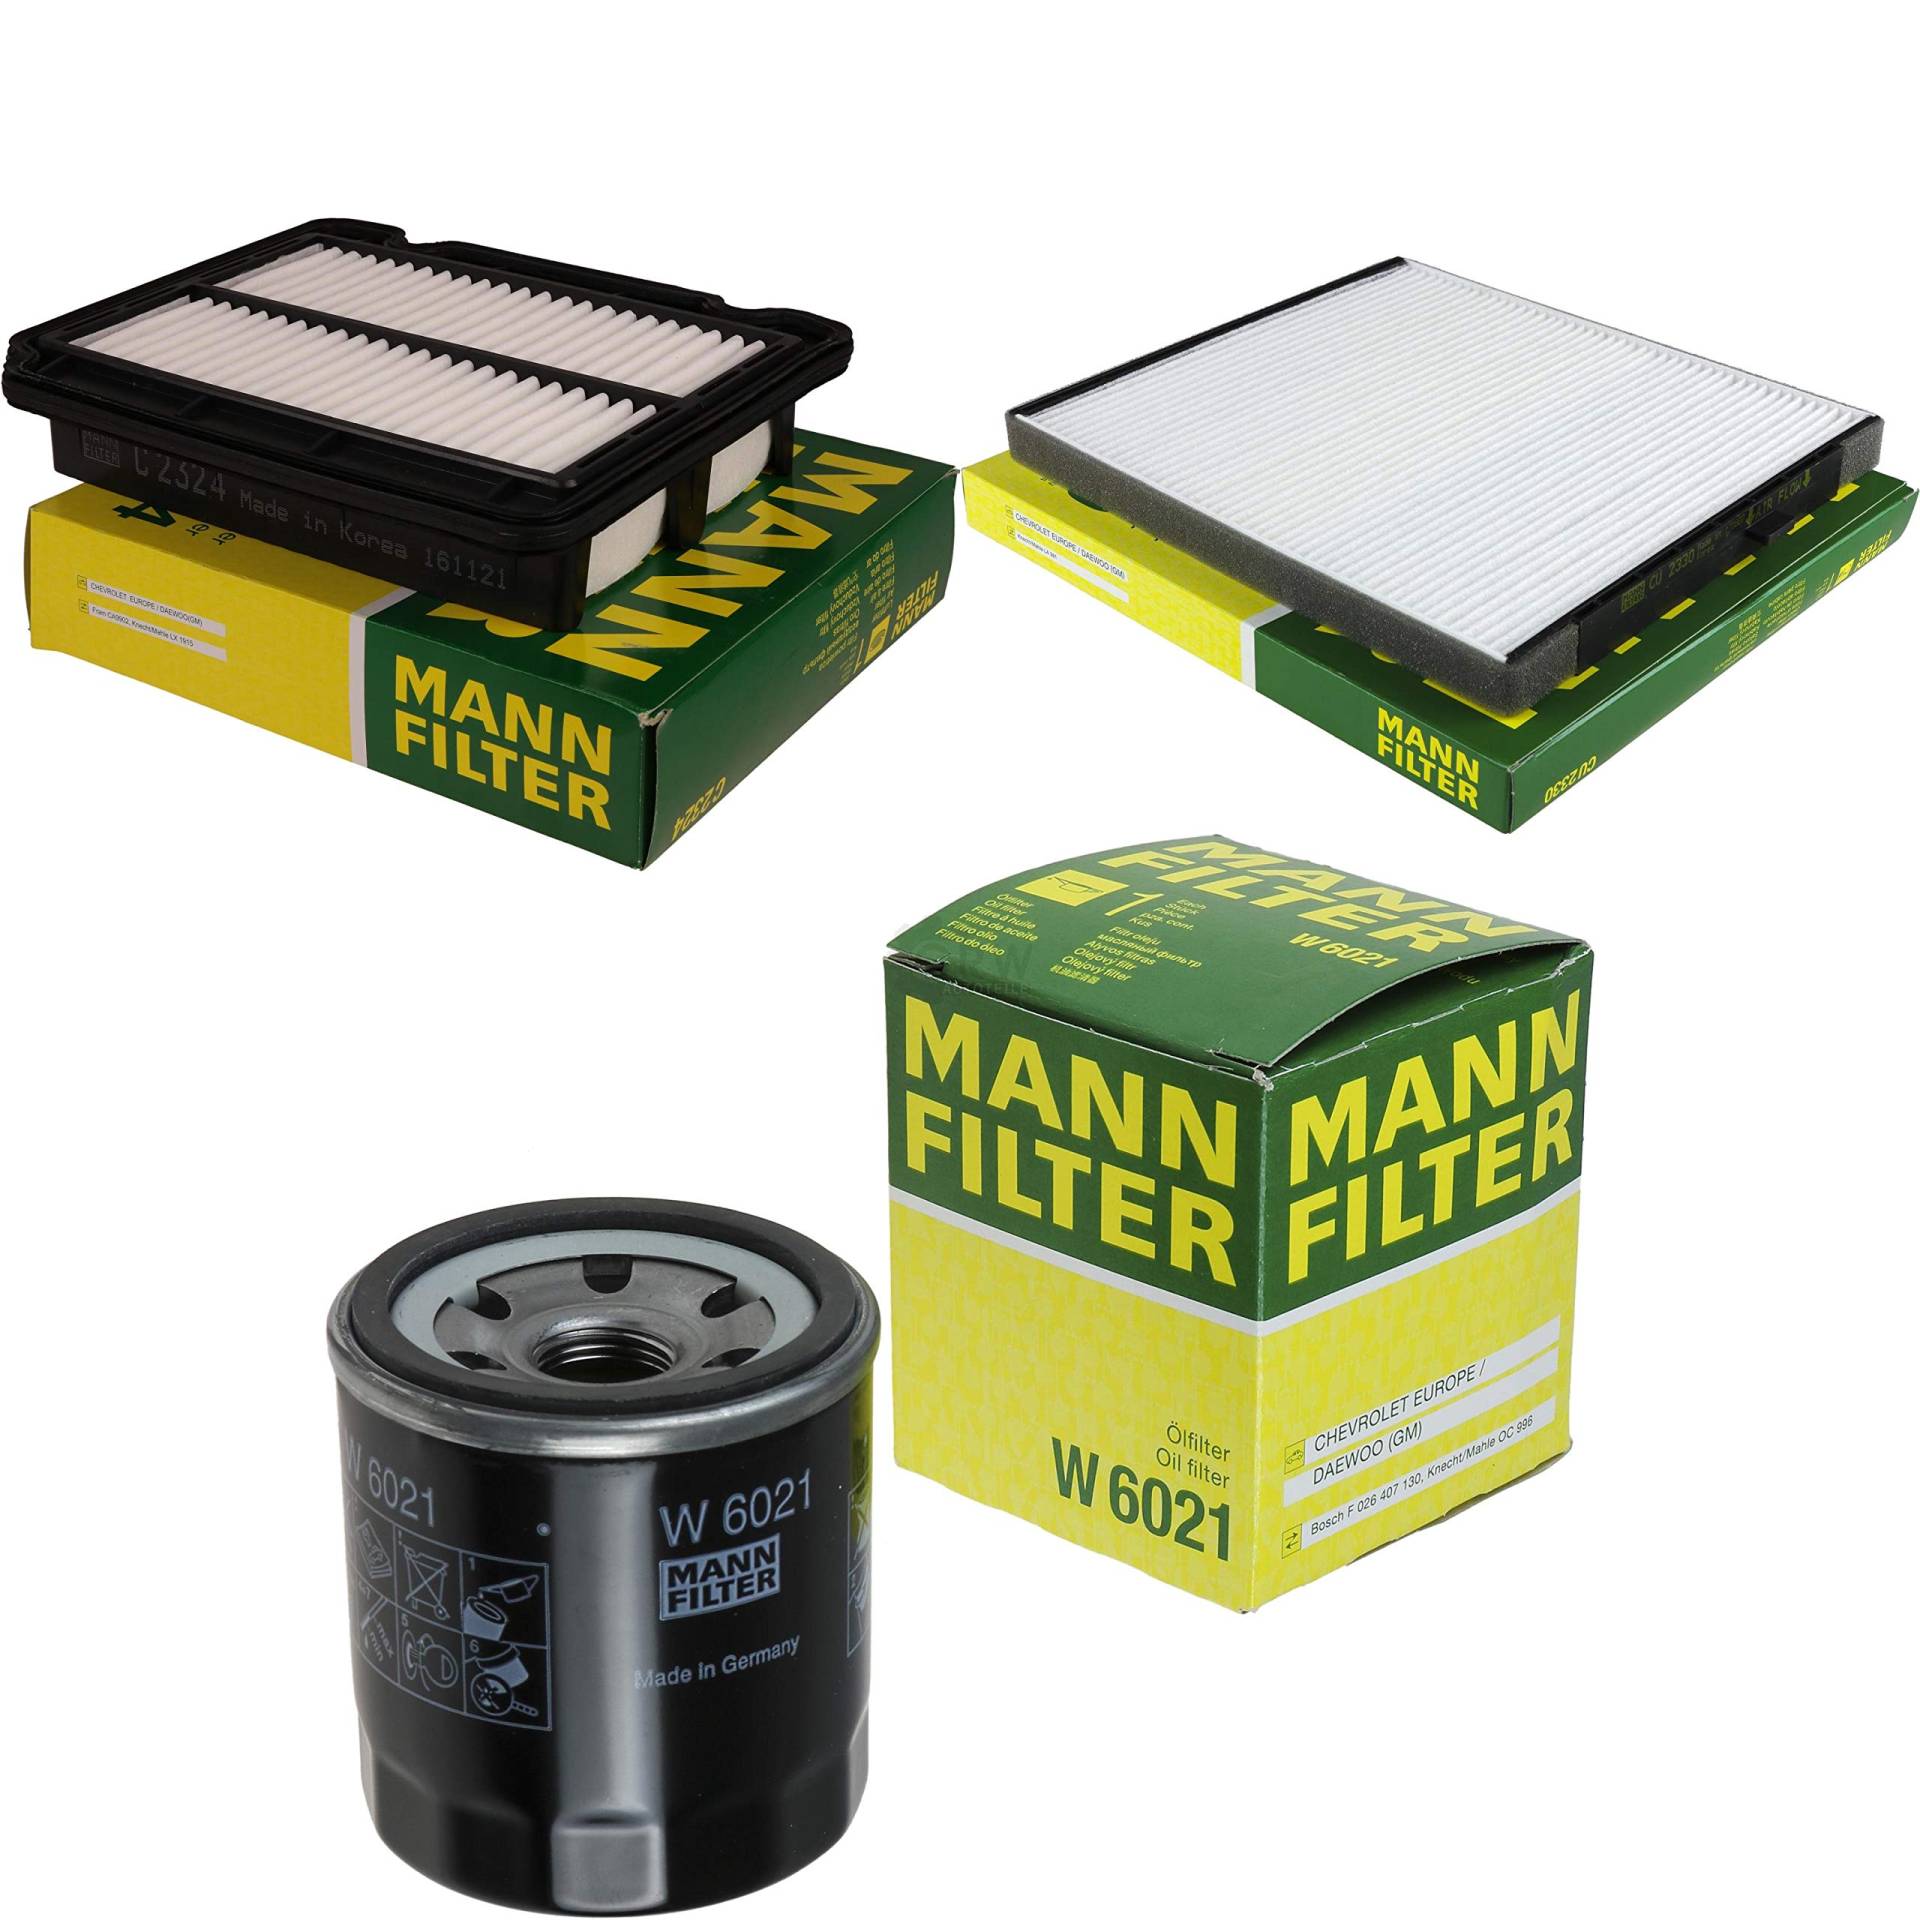 MANN-FILTER Inspektions Set Inspektionspaket Luftfilter Ölfilter Innenraumfilter von QR-Parts